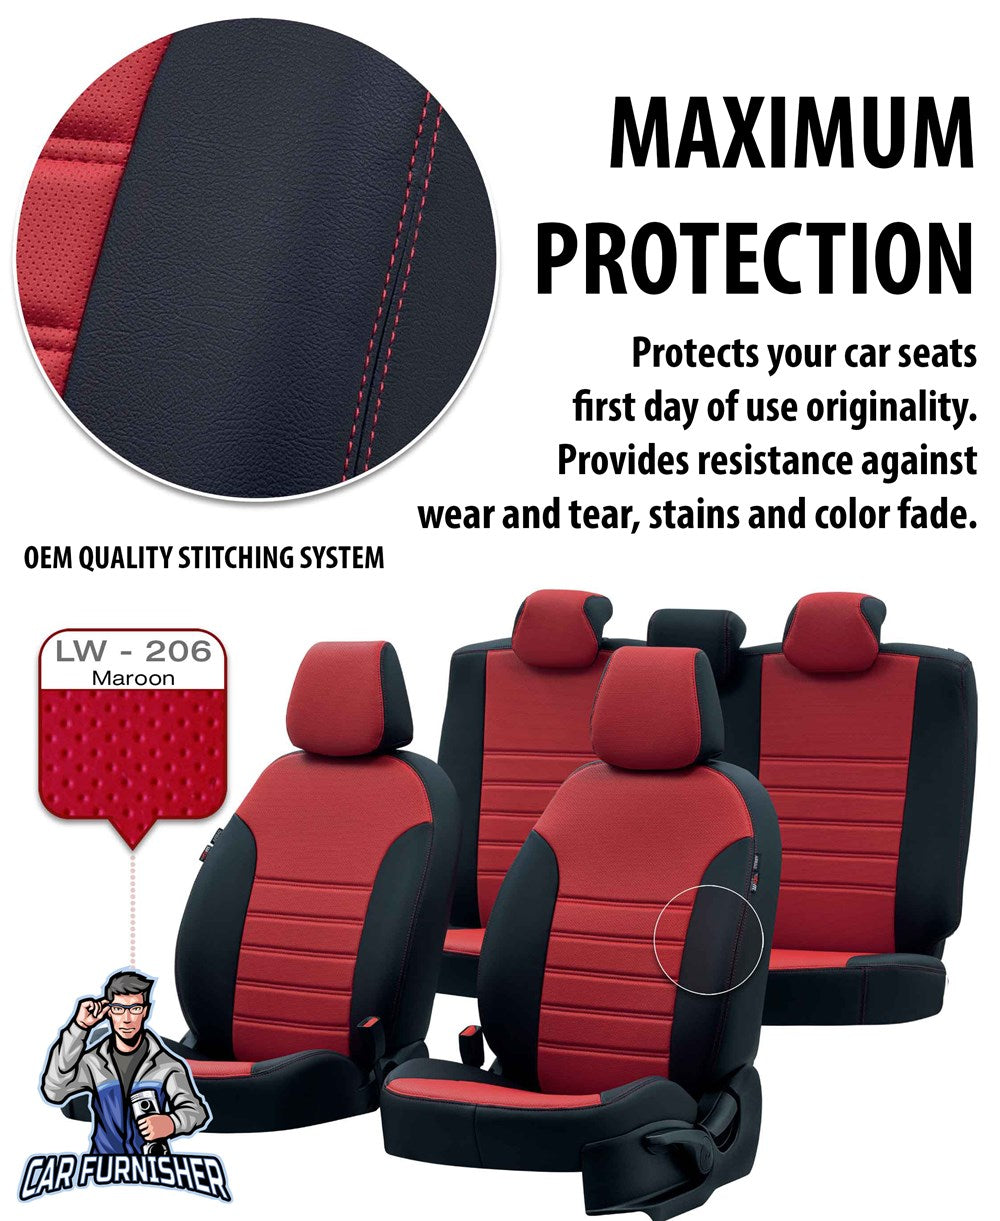 Kia Cerato Seat Covers Istanbul Leather Design Burgundy Leather